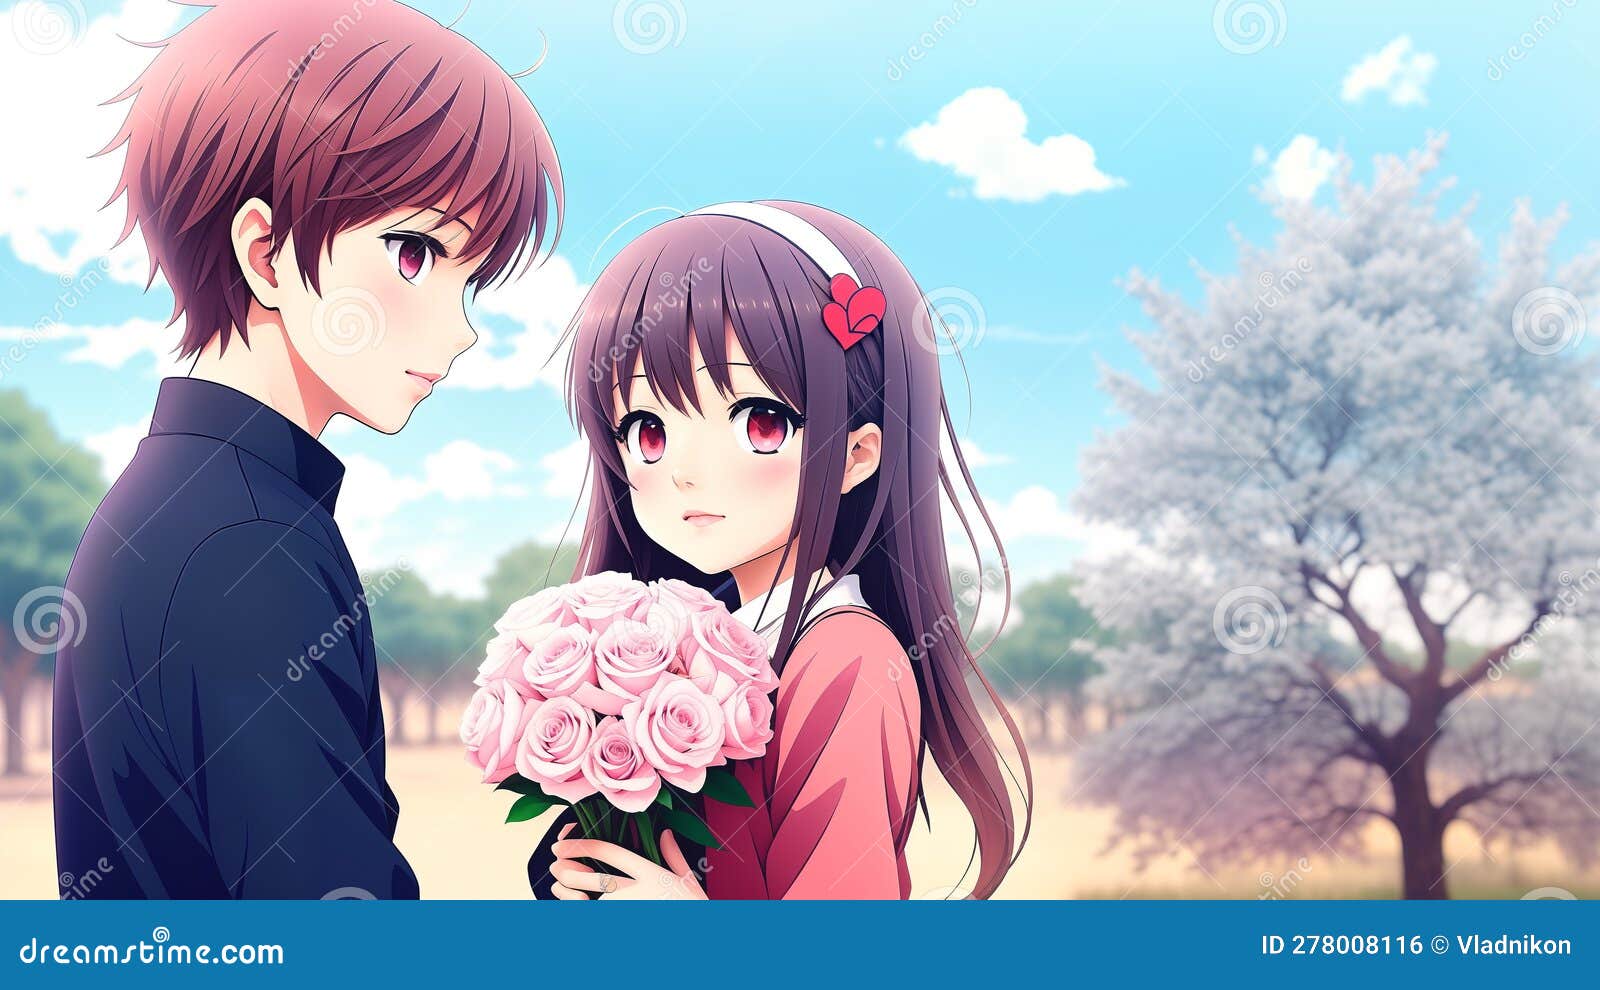 LoveNest - Anime Dating Sim Free Download App for iPhone - STEPrimo.com